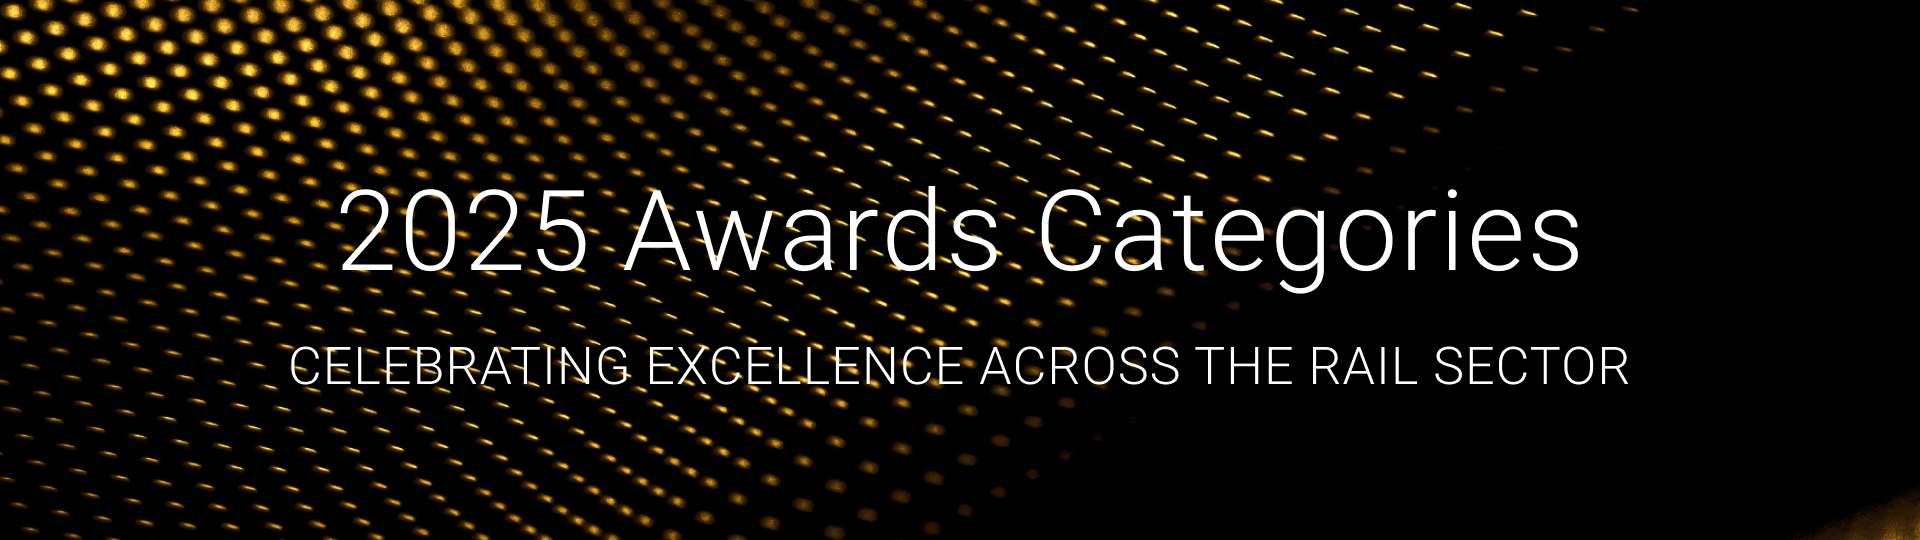 Award Categories - Web Banner